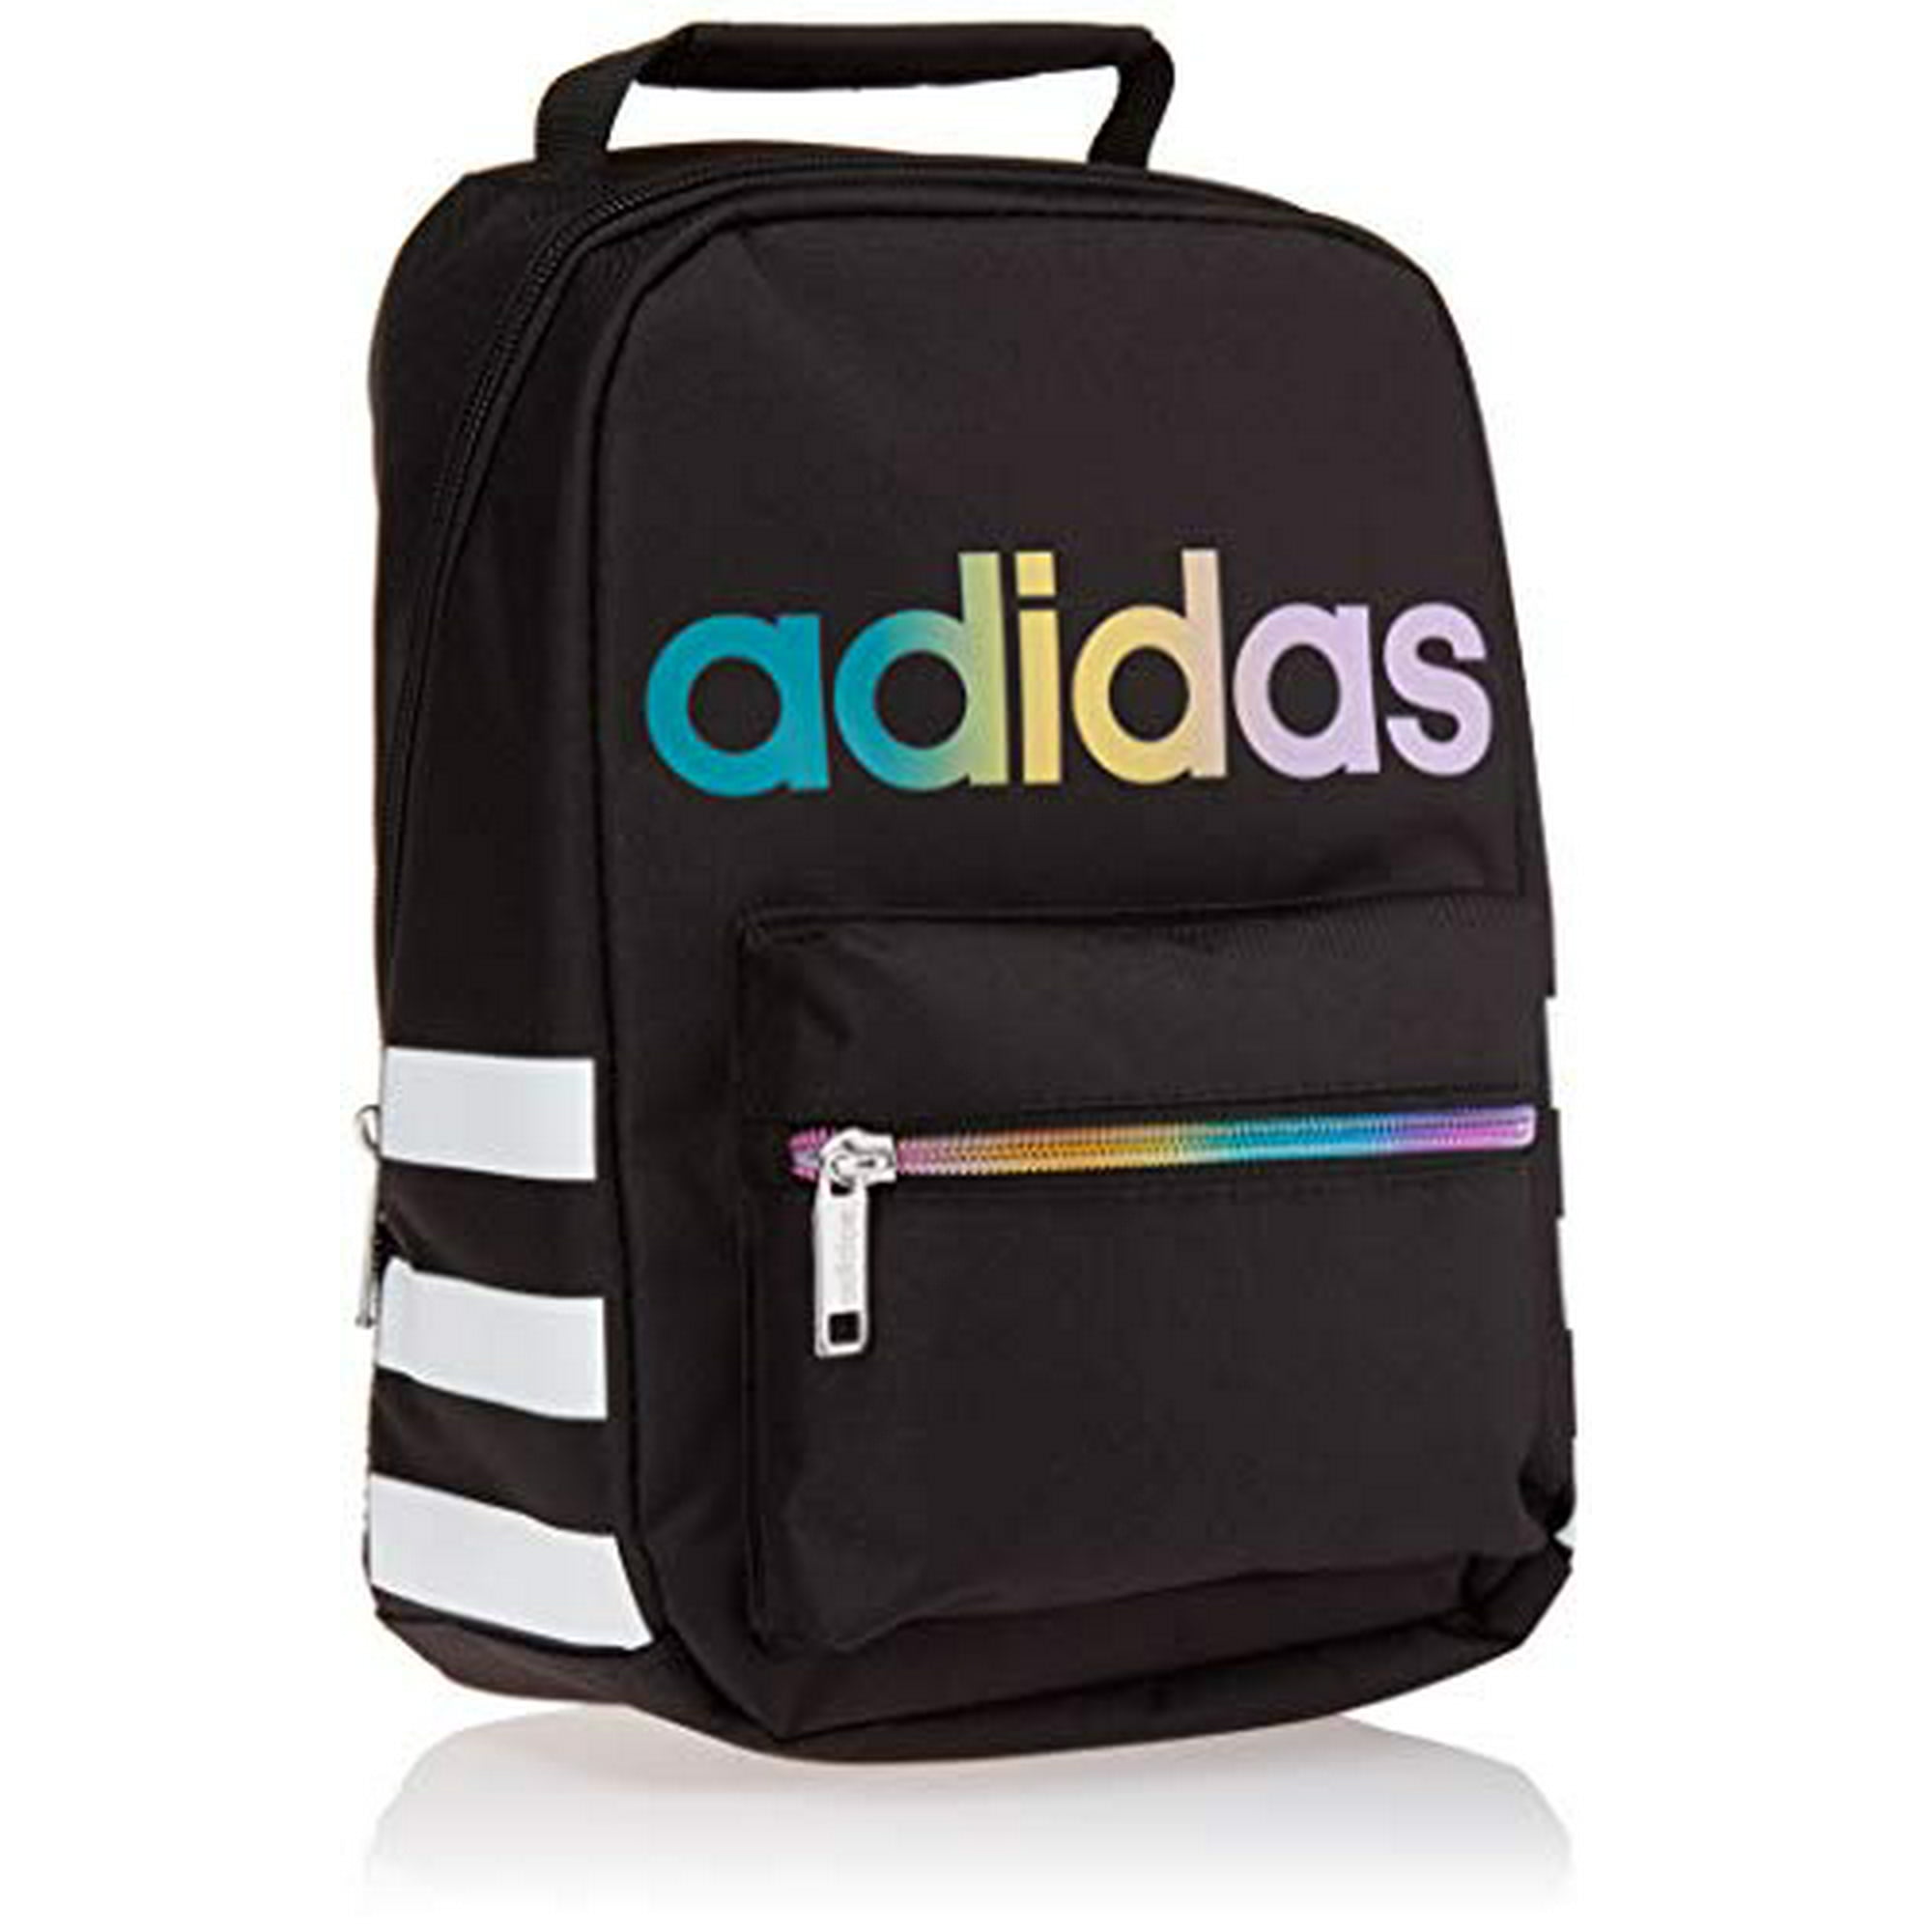 adidas Unisex Santiago Insulated Lunch Bag, Black/ Rainbow, ONE SIZE -